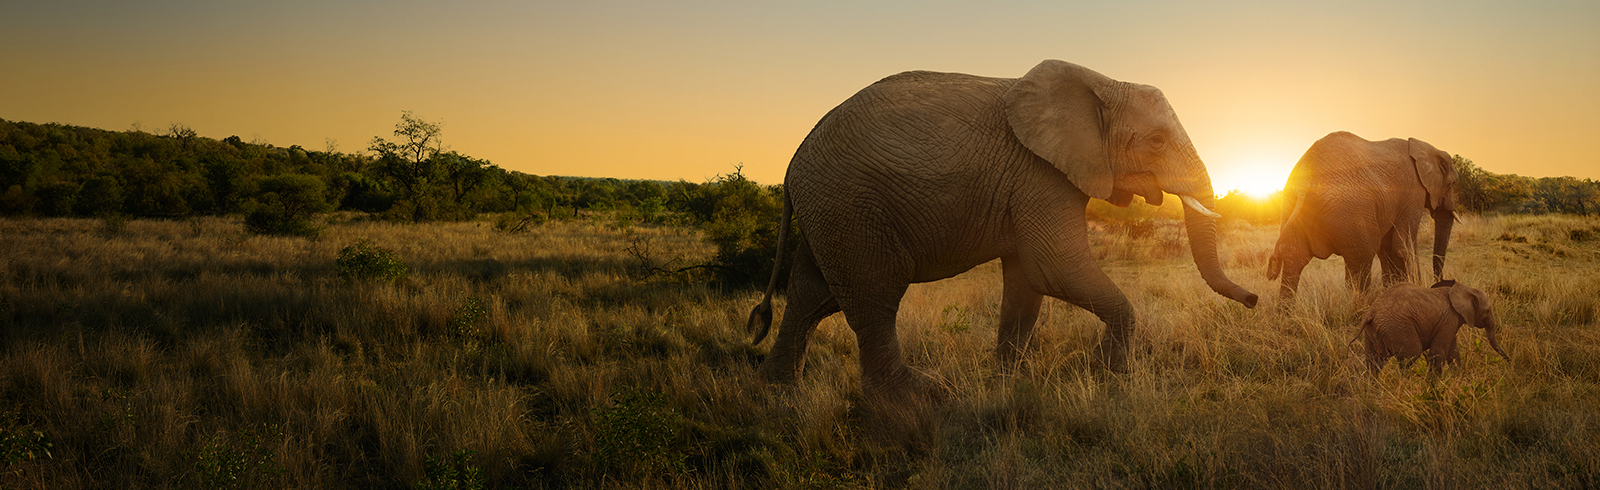 a group of elephants walking across the tropical grass field when sunset